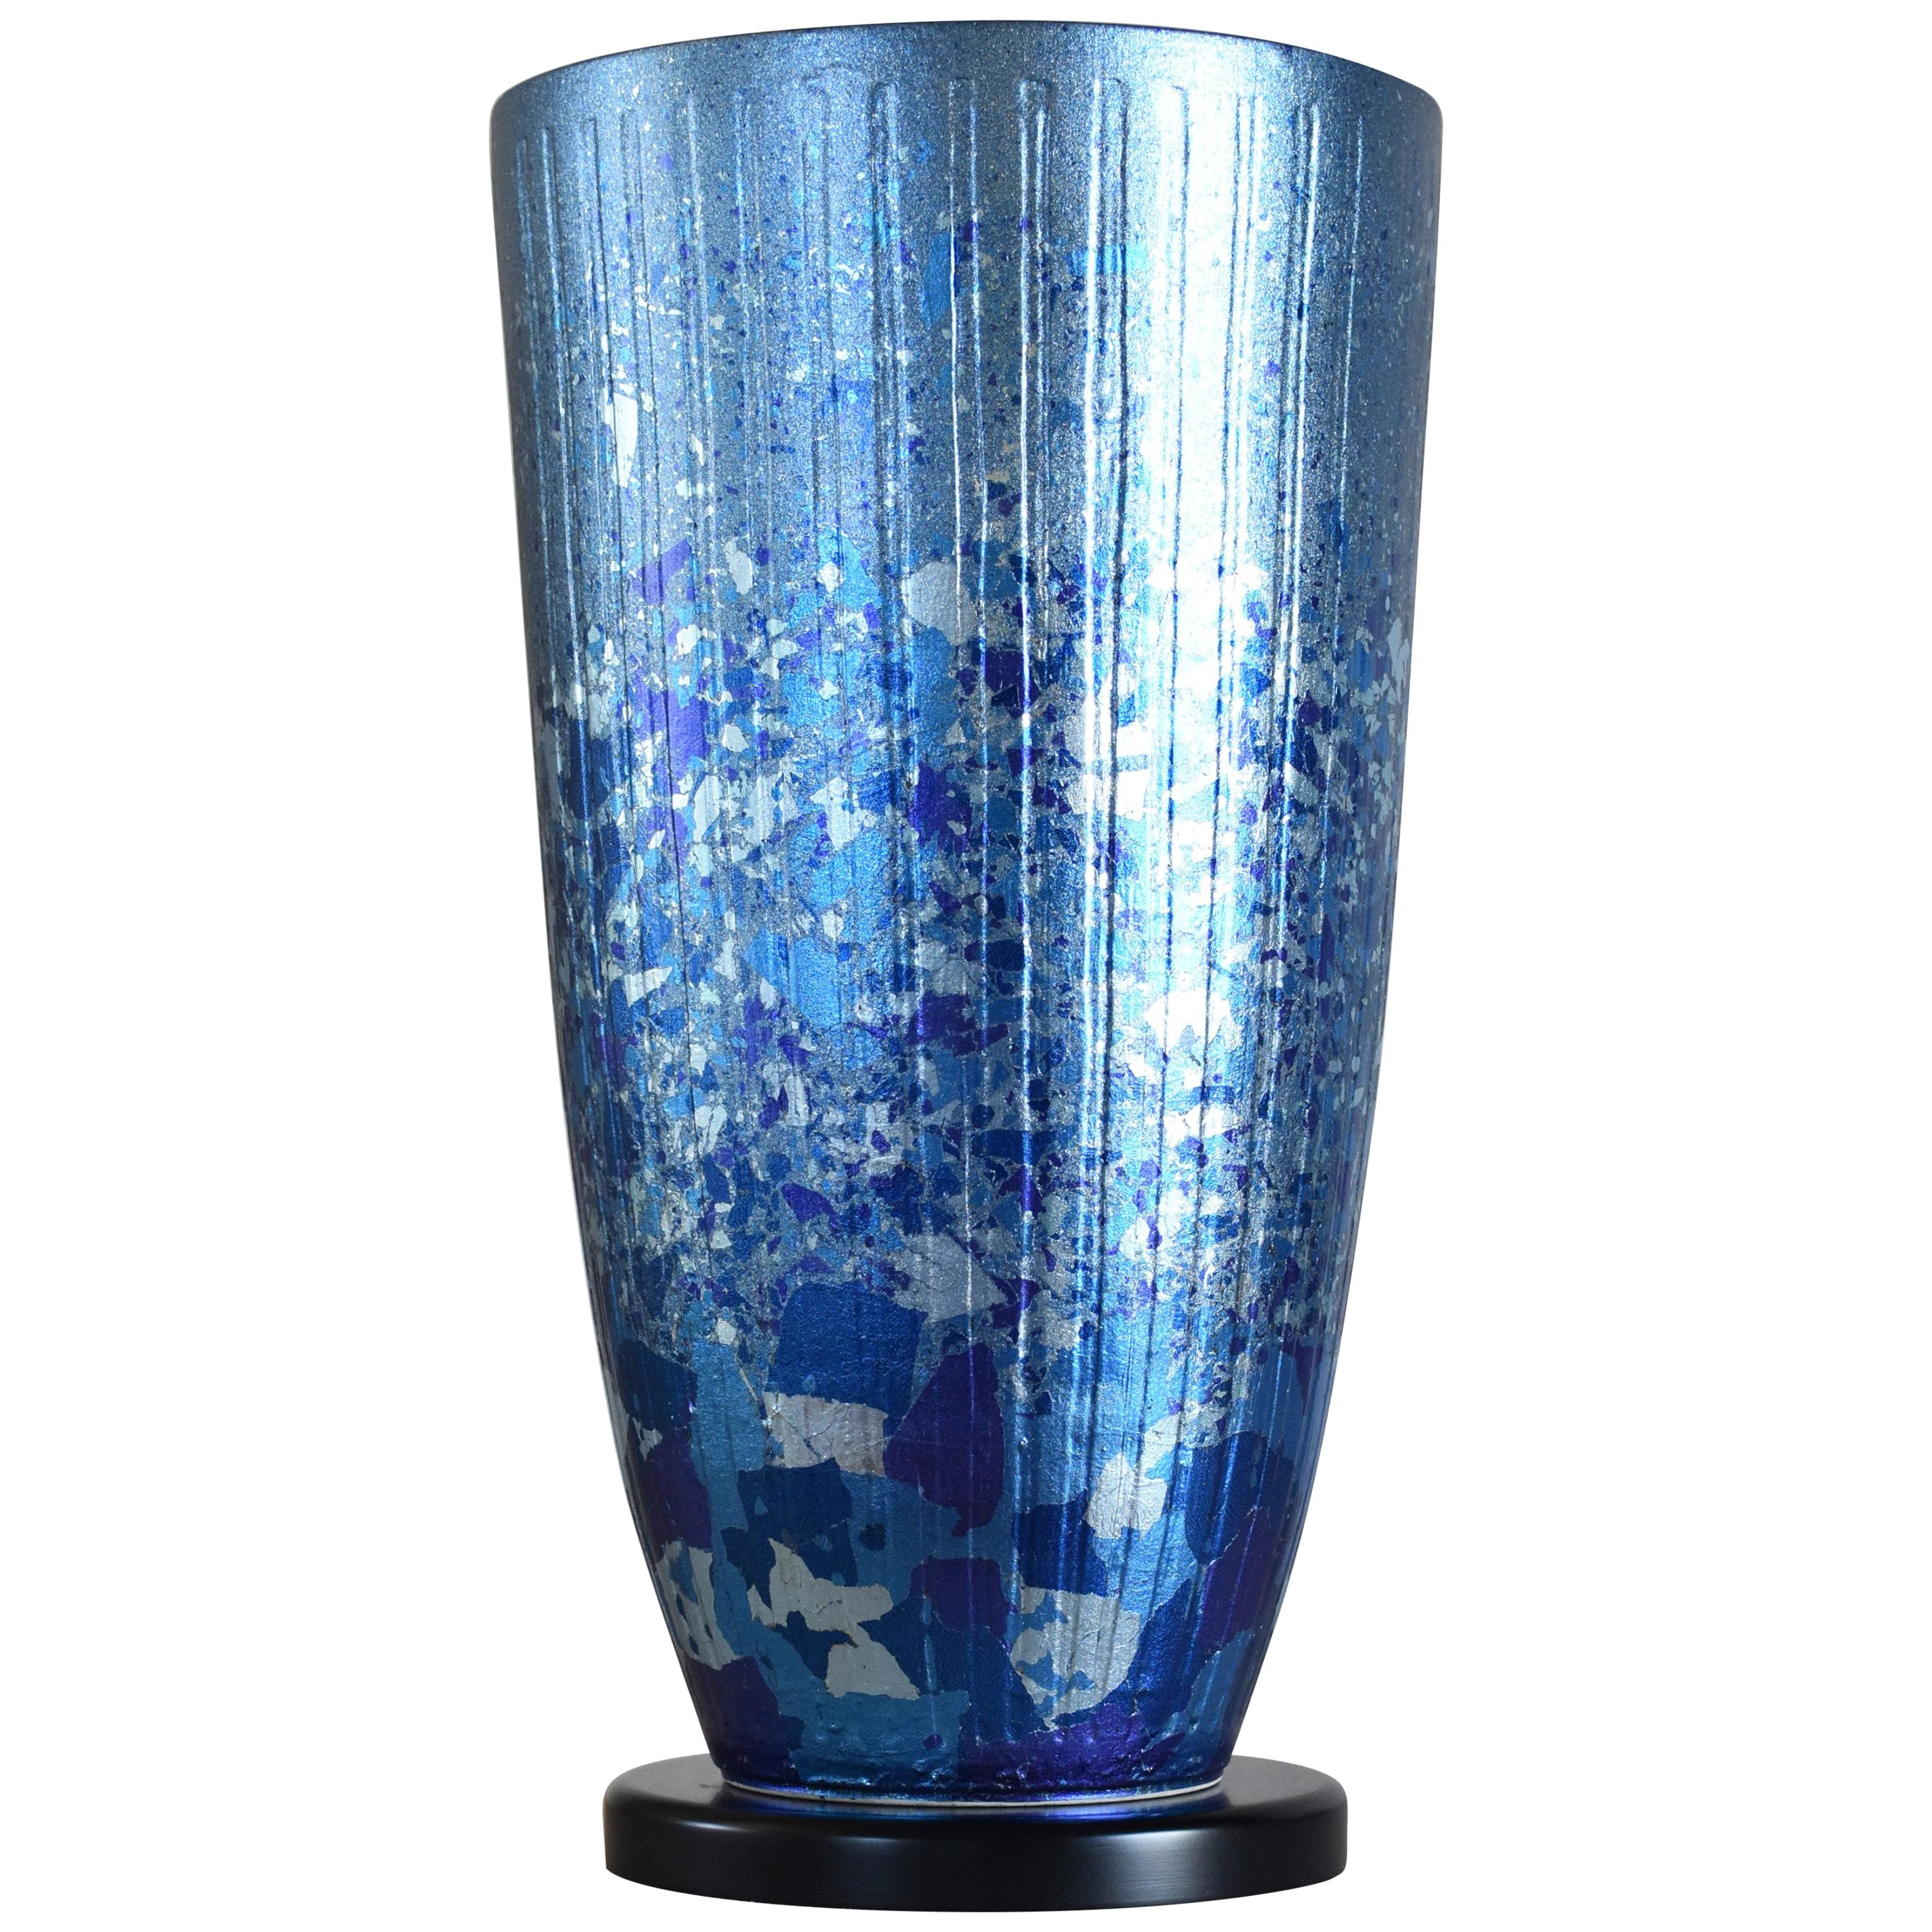 Japanese Contemporary Blue Silver Porcelain Vase by Master Artist